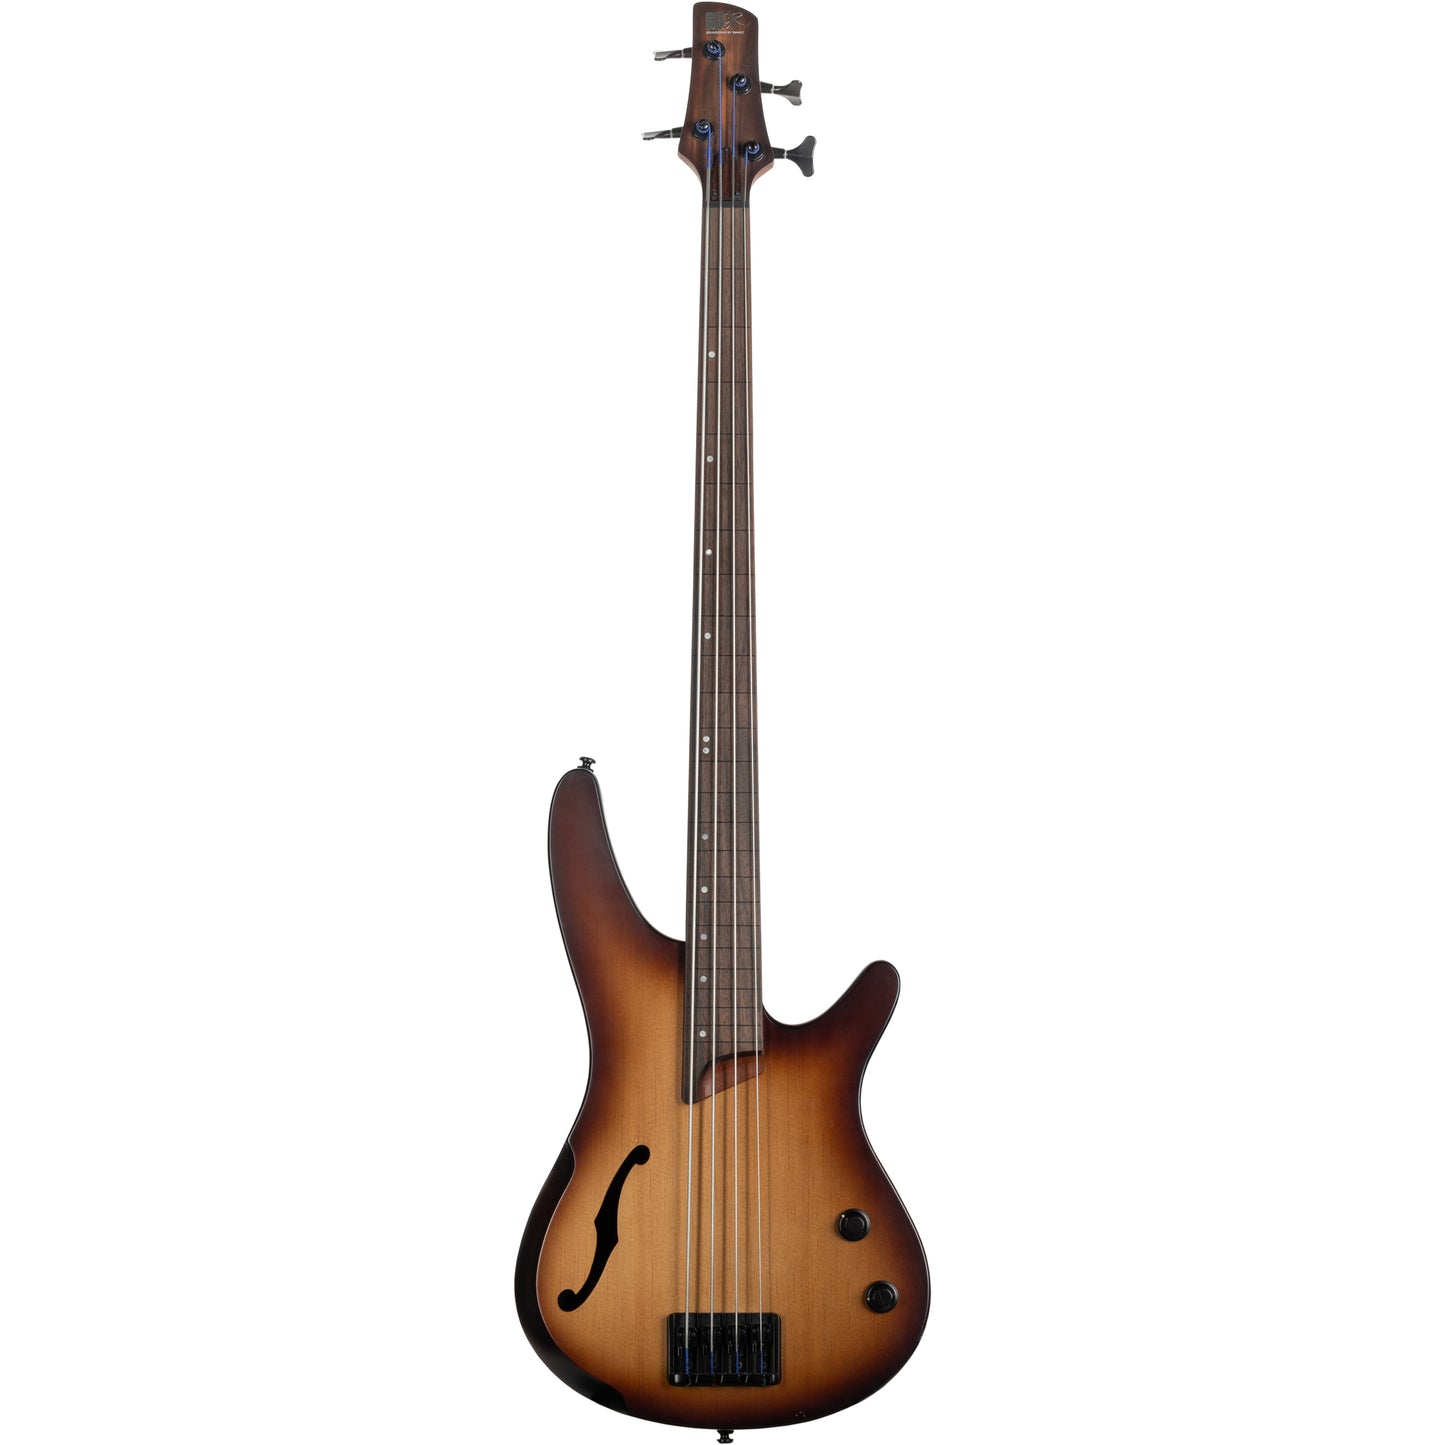 Ibanez SRH500F Fretless Bass Guitar - Natural Browned